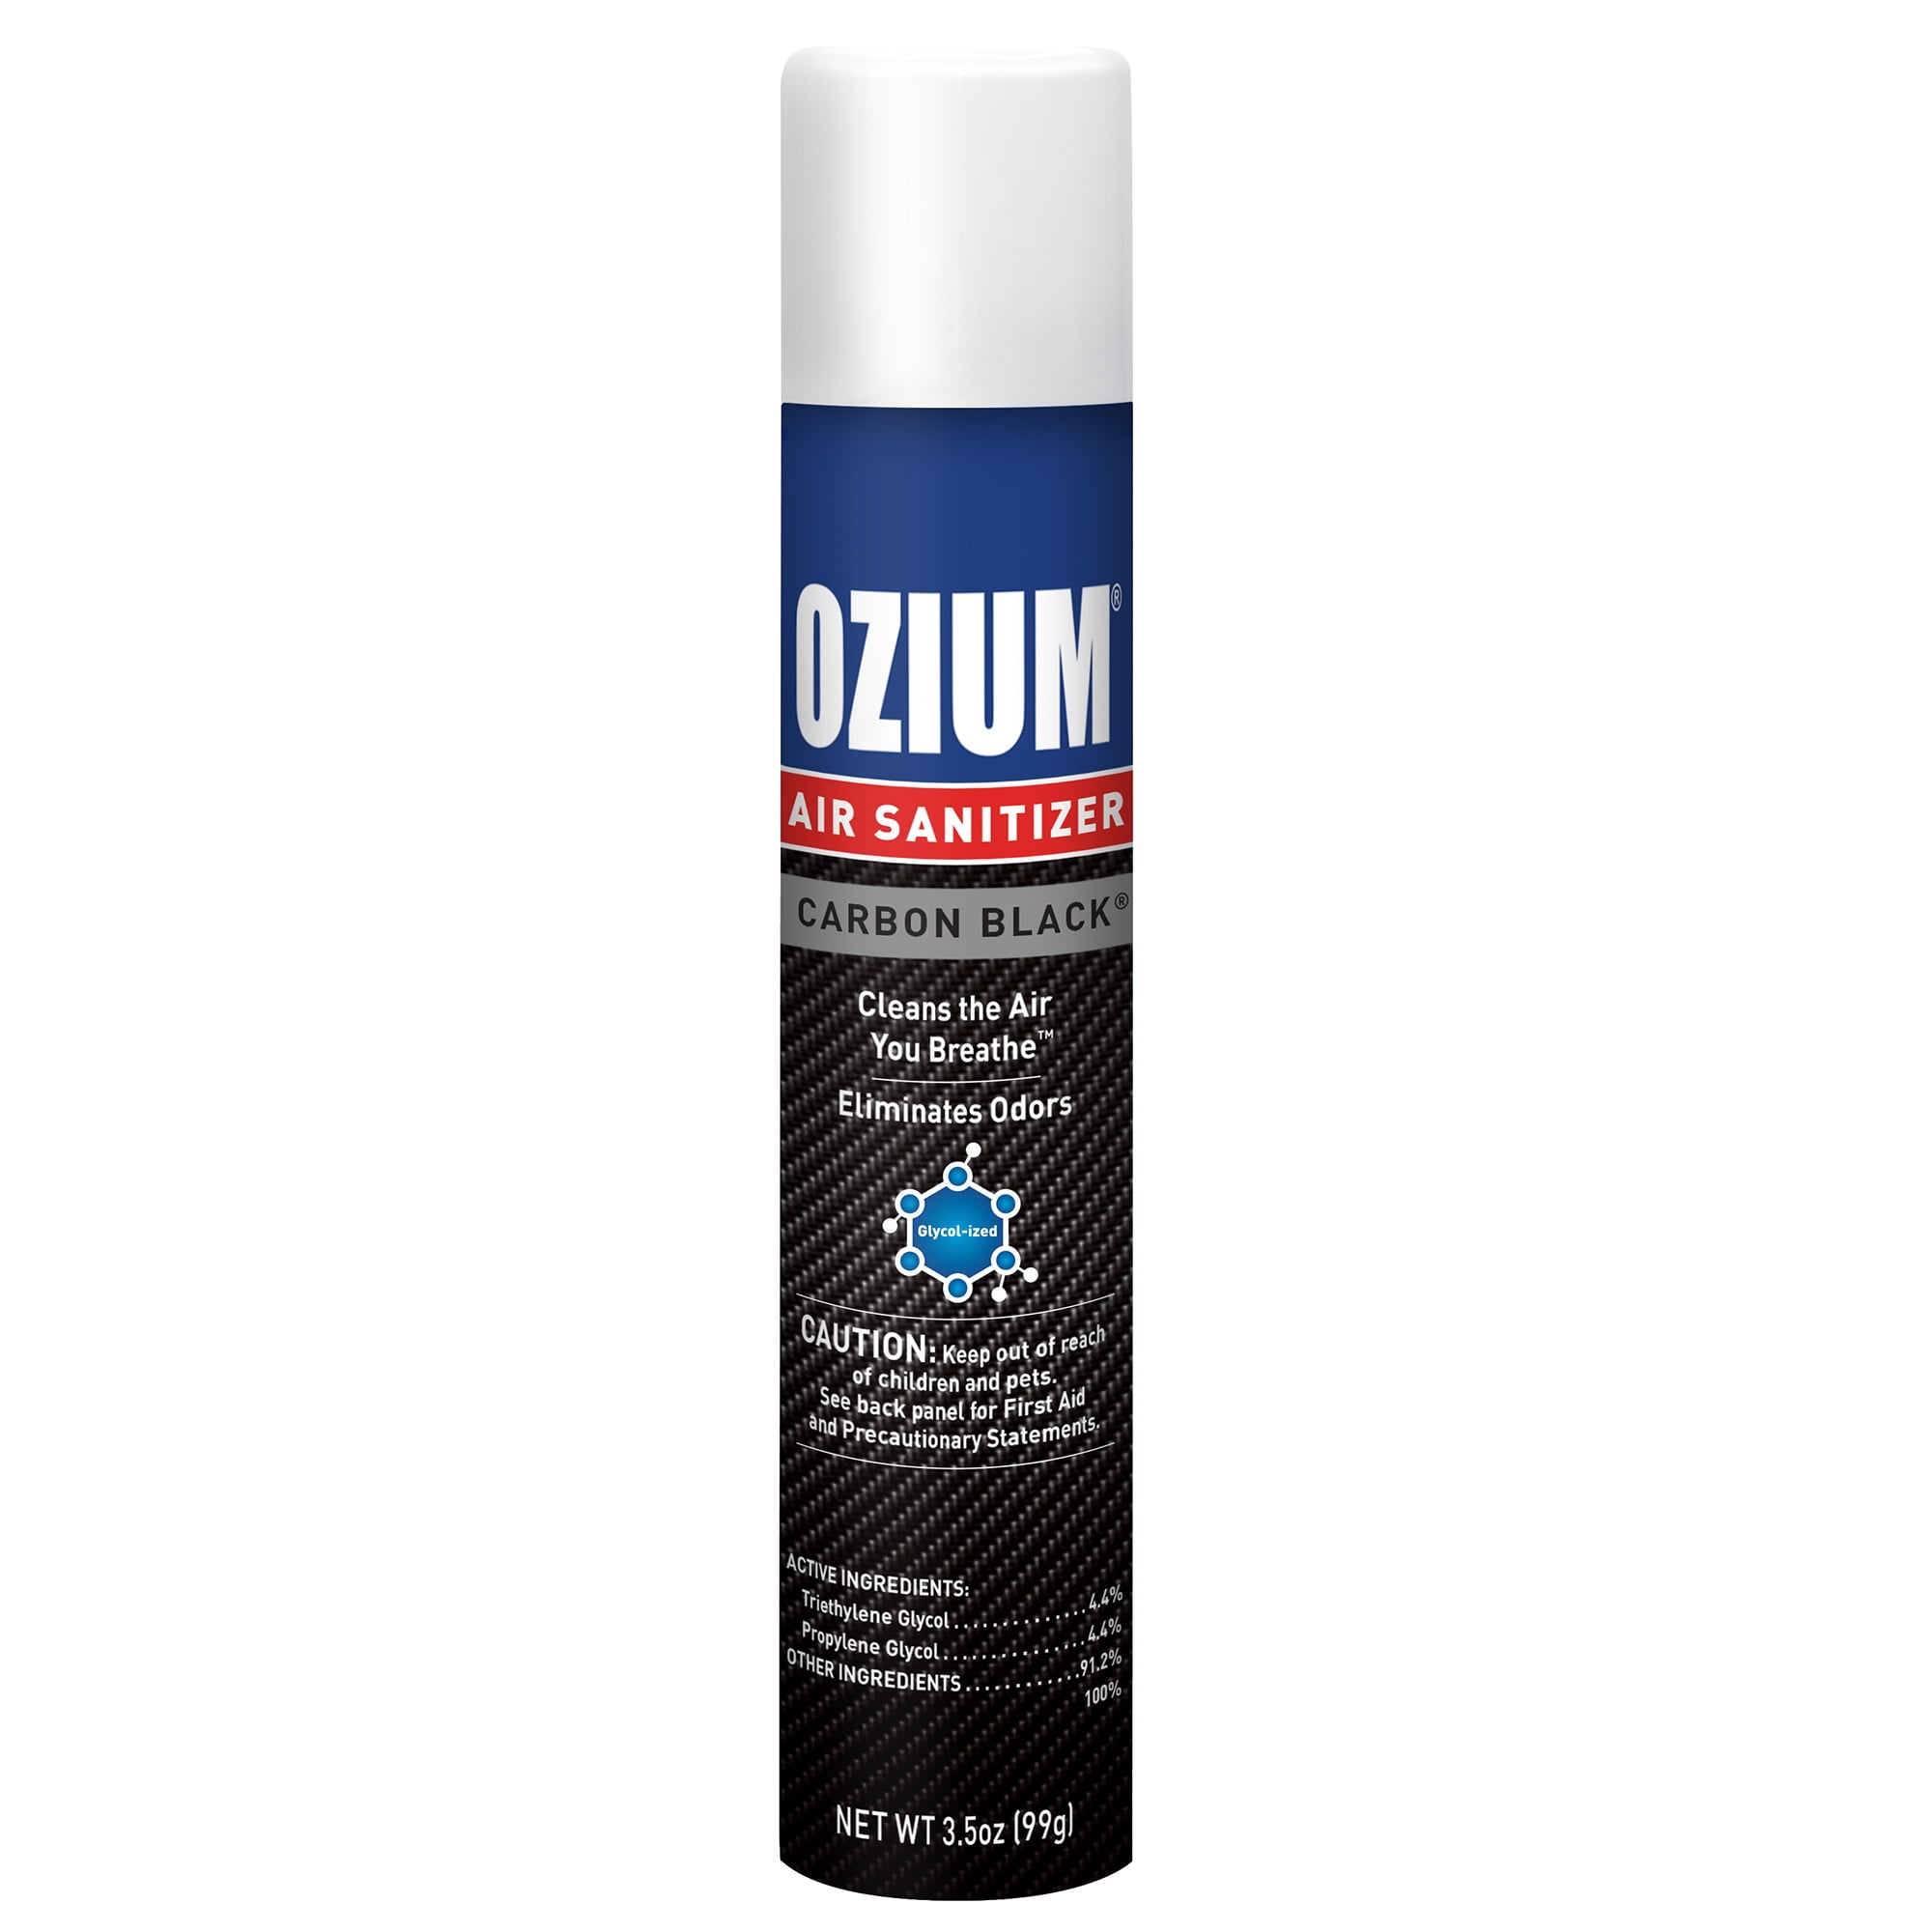 OZIUM Air Sanitizer Spray, 3.5oz, Carbon Black Fragrance